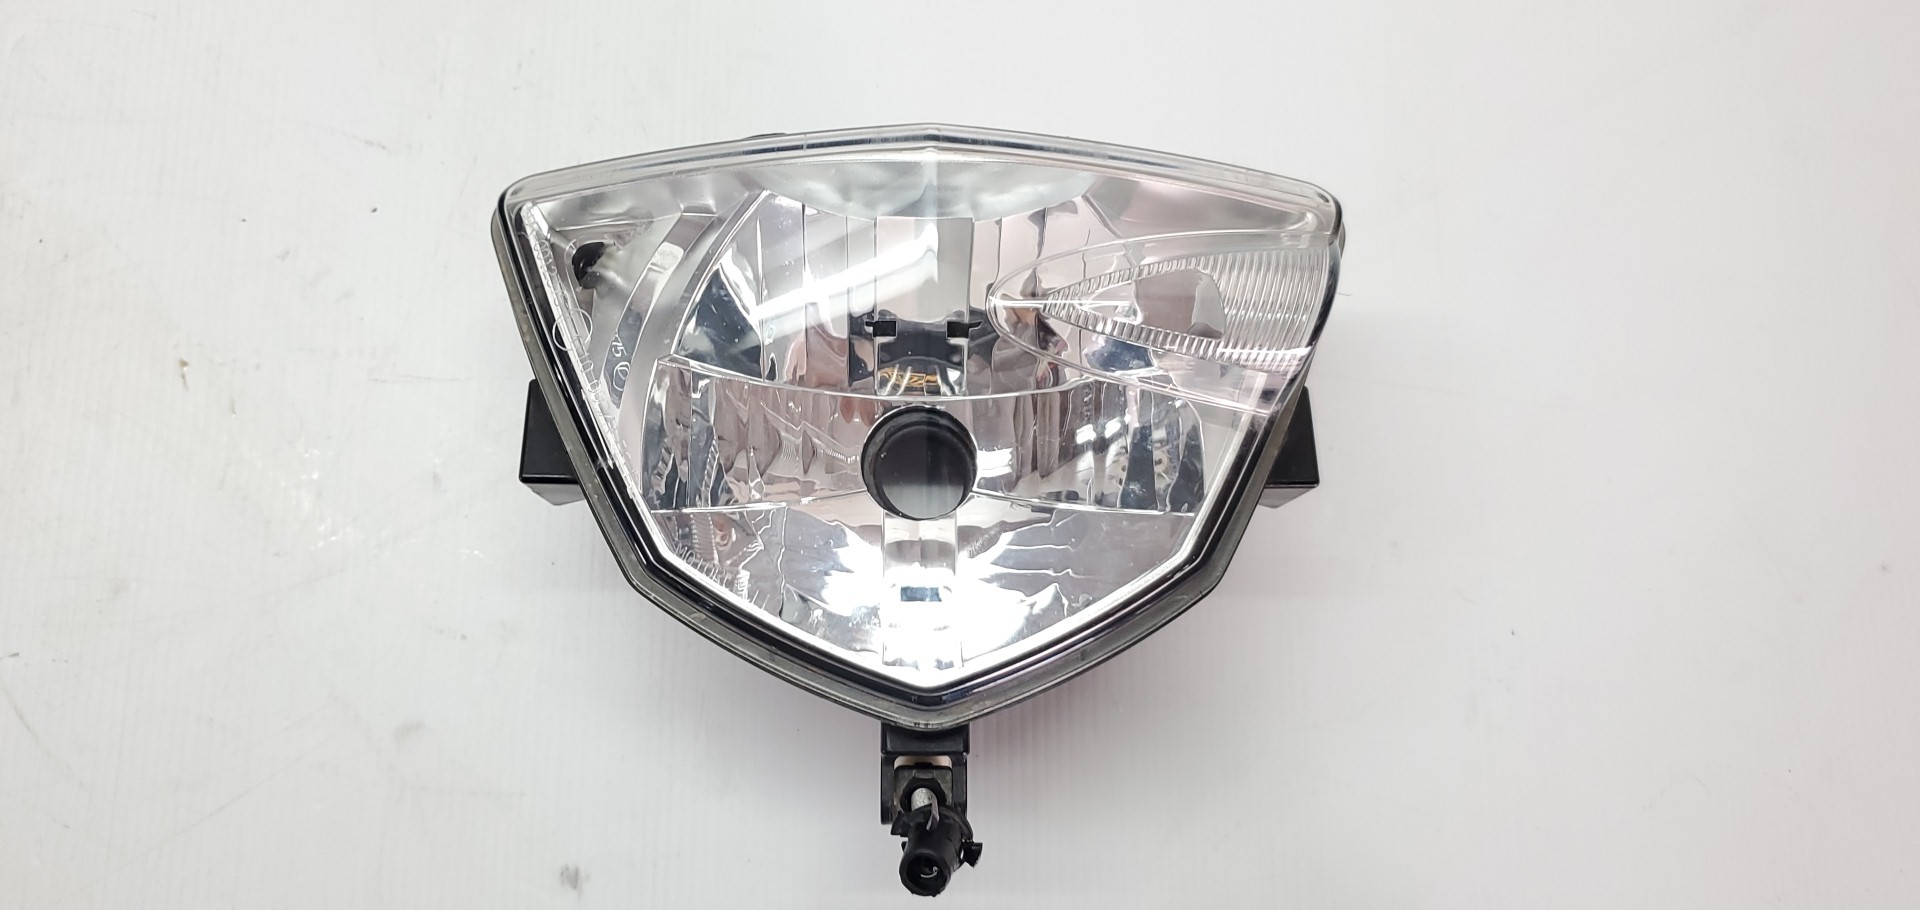 Head Light Headlight BMW G450X 2009 G 450 X #801